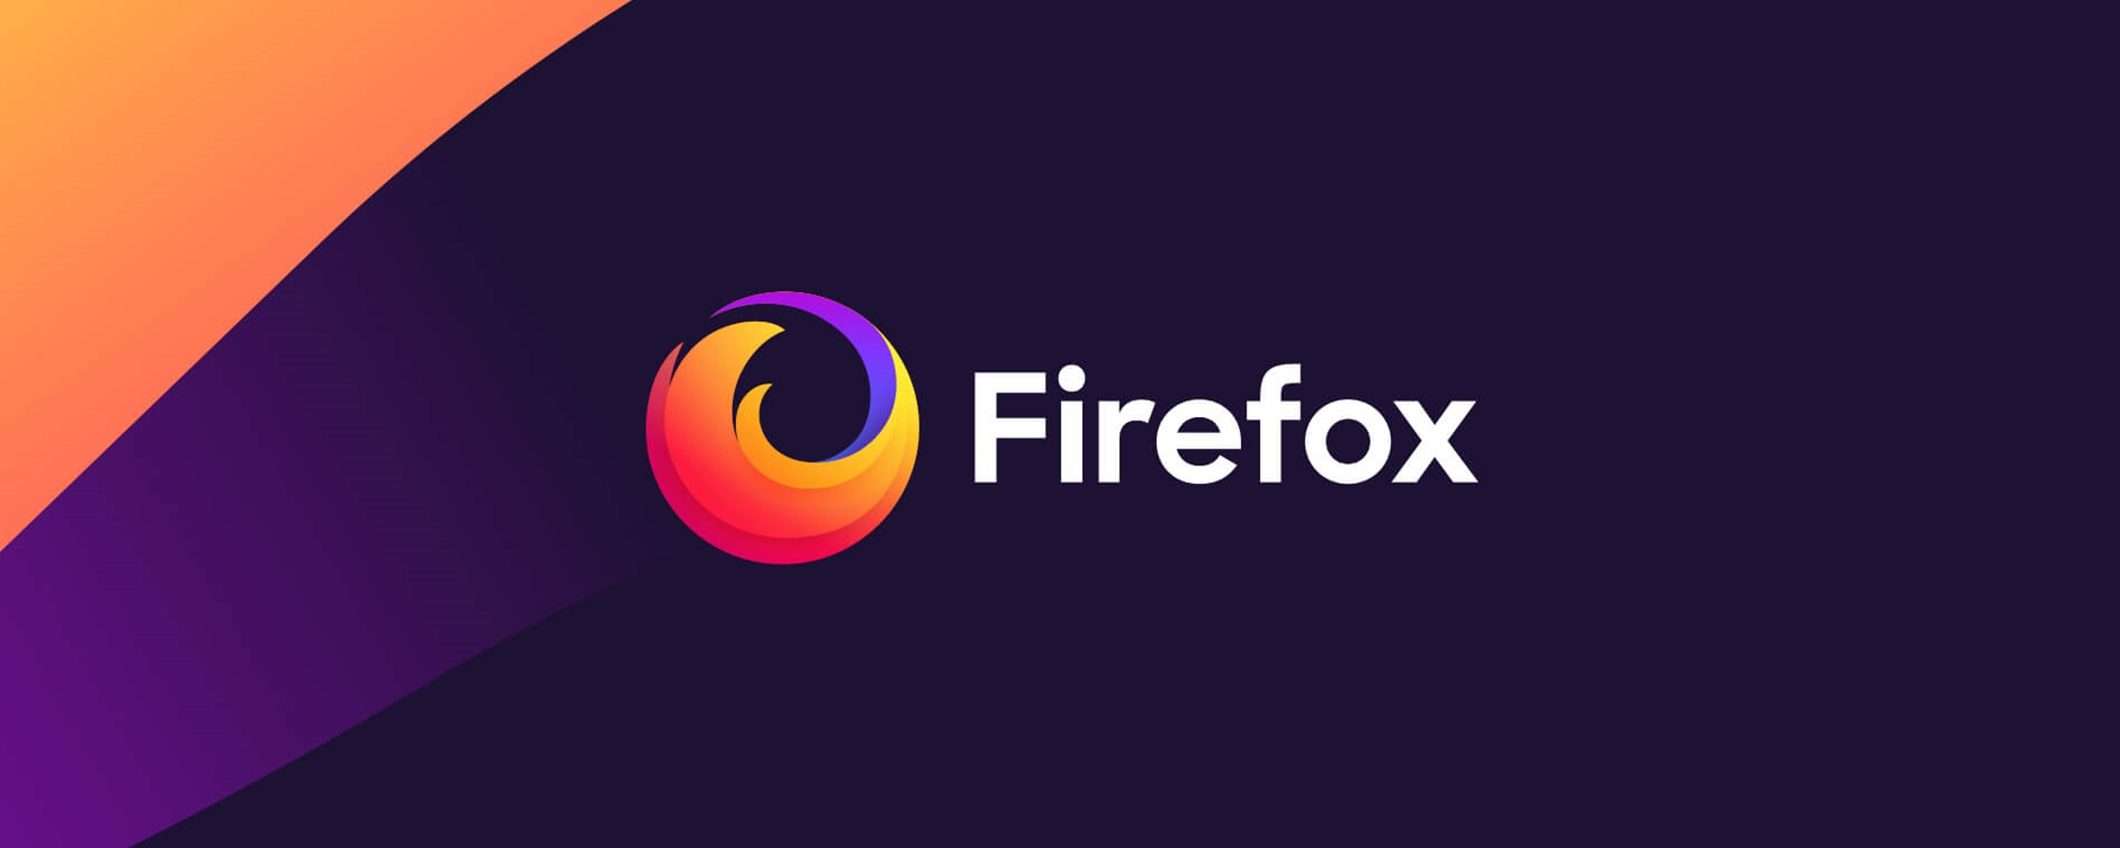 Firefox 123 introduce le anteprime delle schede